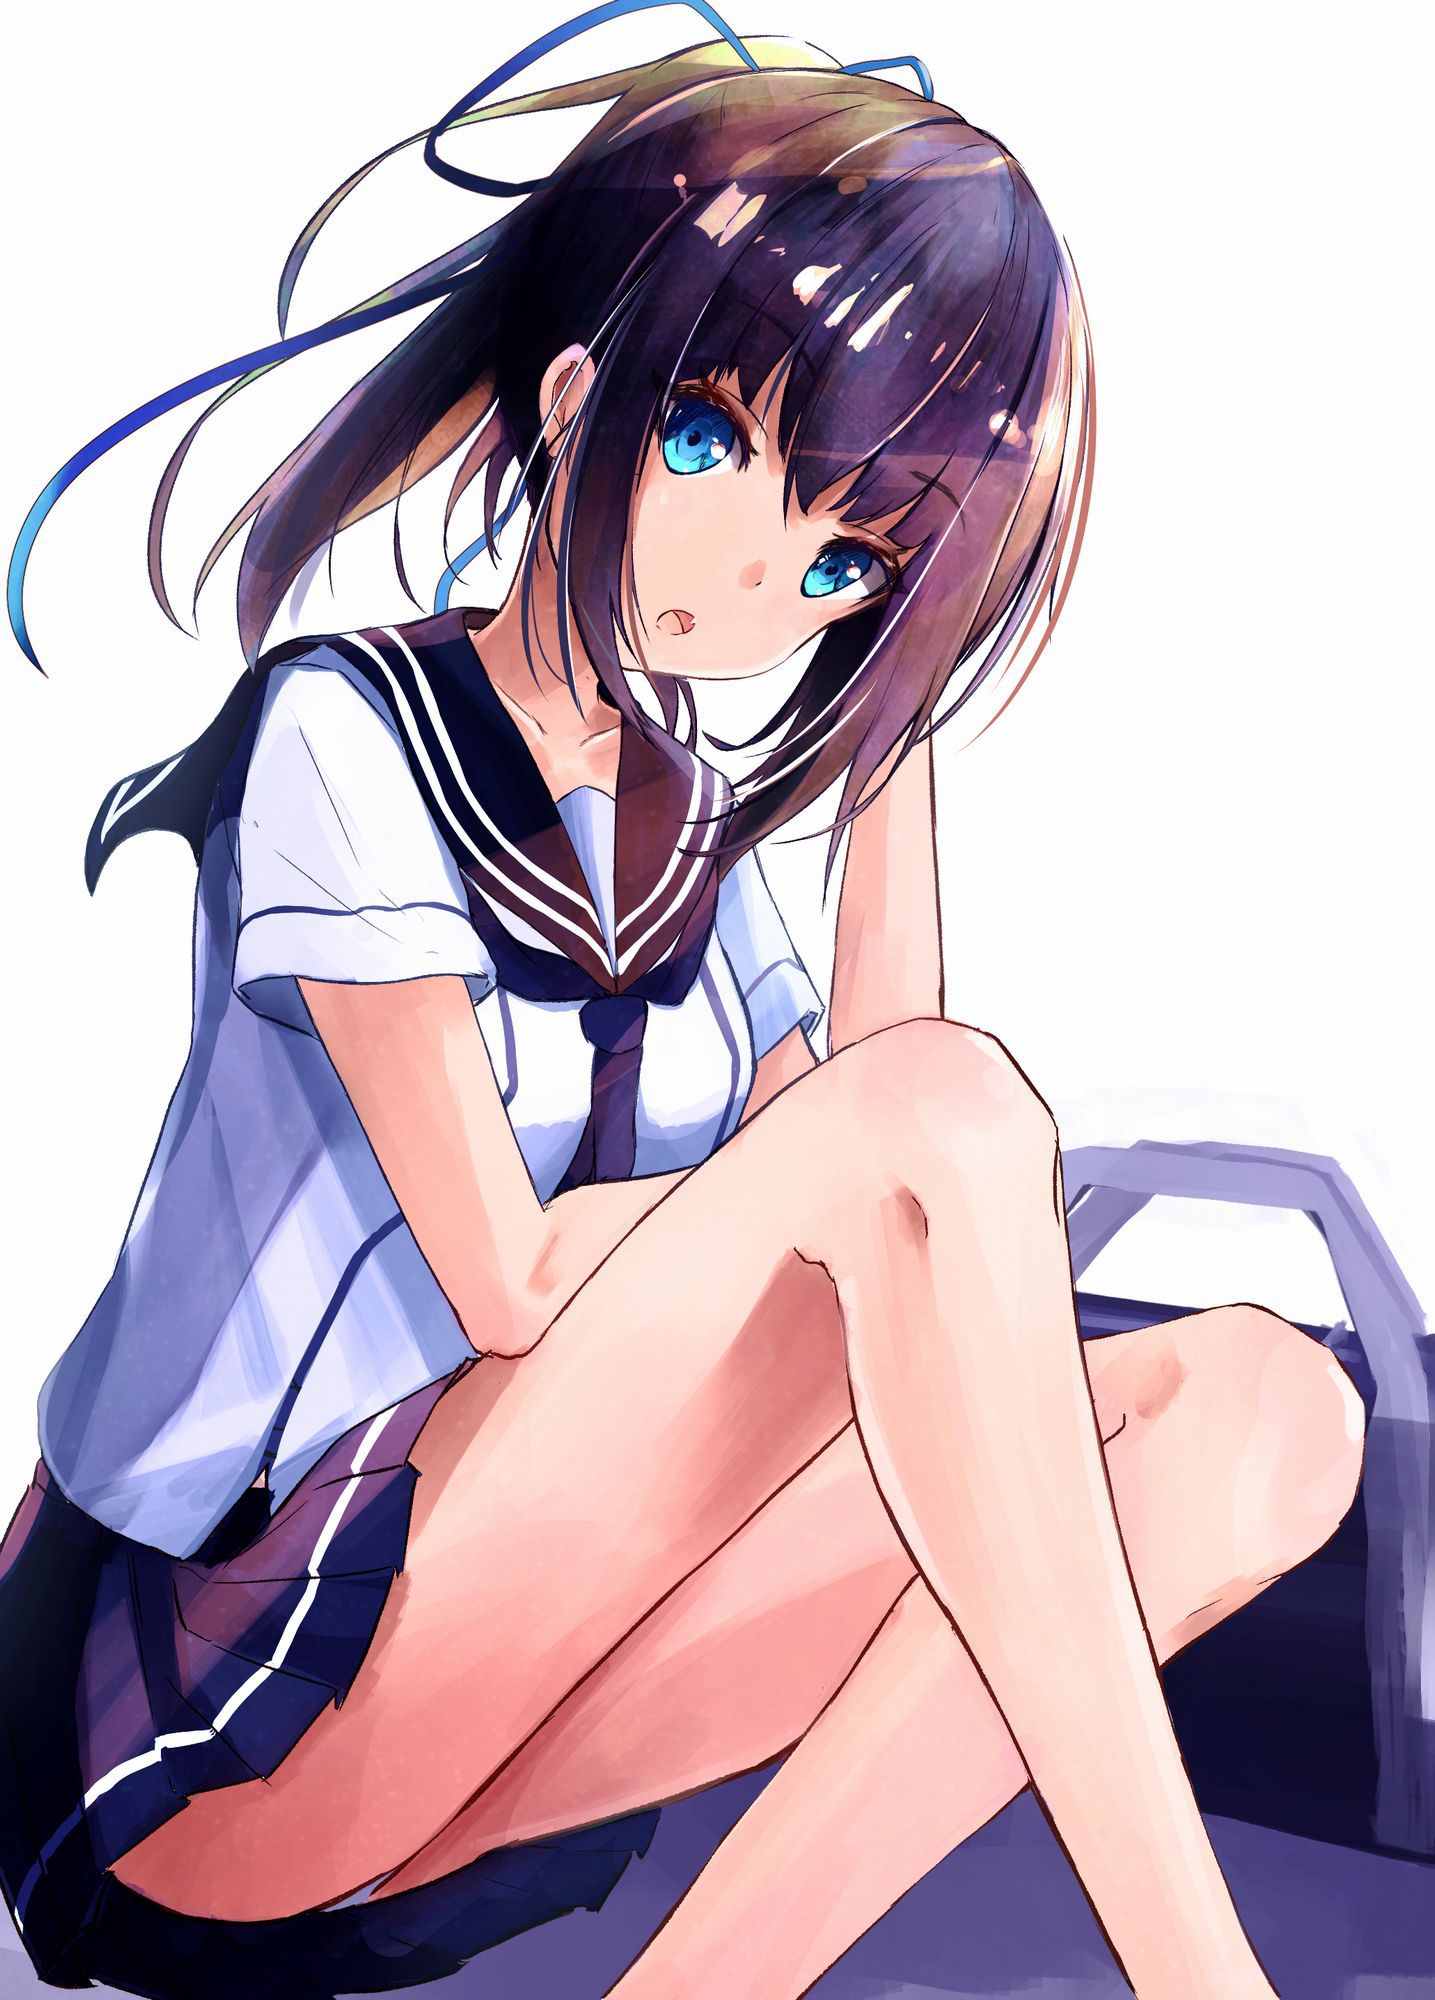 [Secondary] secondary image of a pretty girl wearing a school uniform Part 10 [uniform, non-erotic] 33